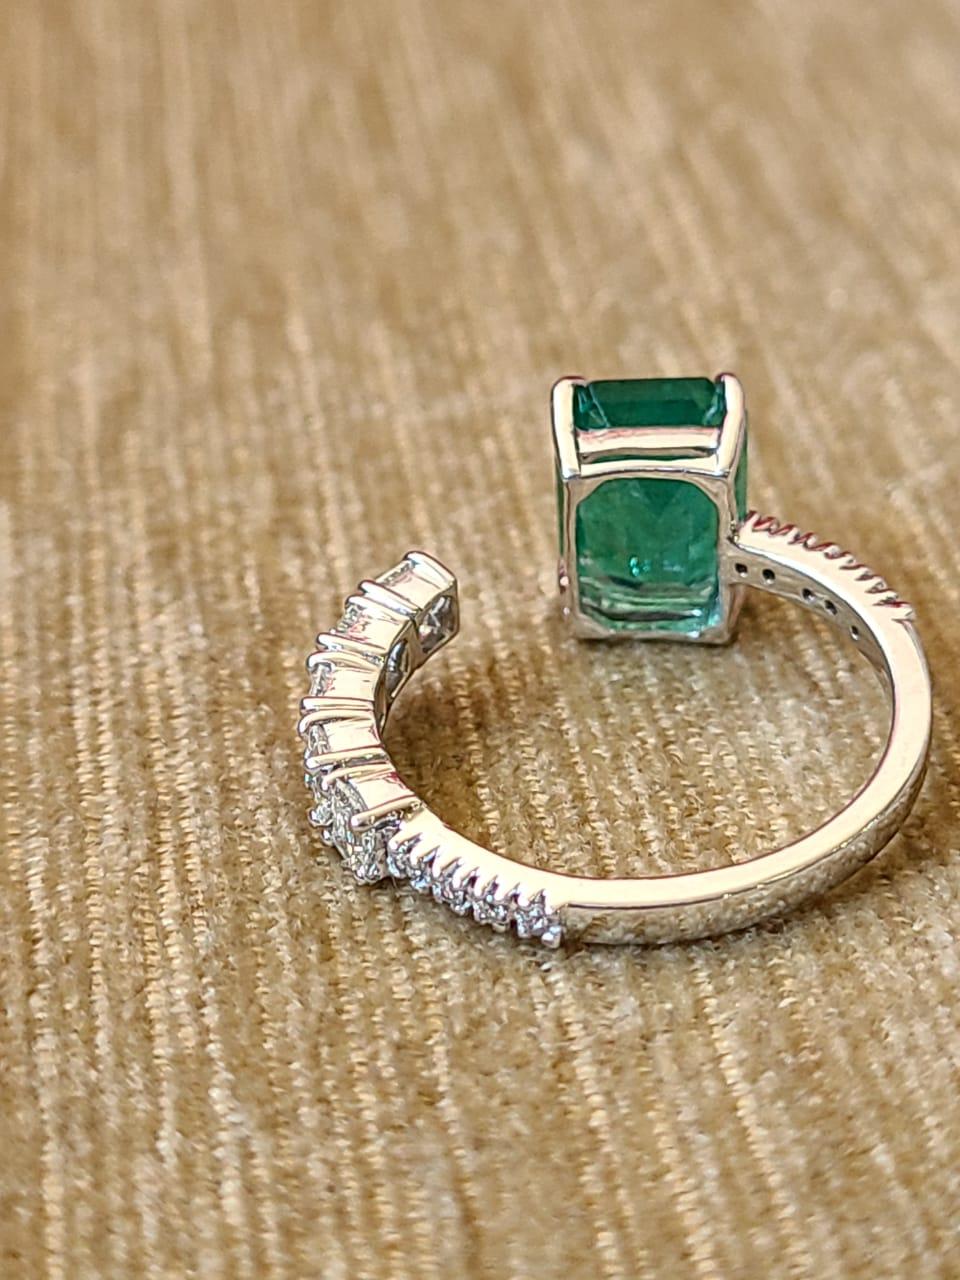 Emerald Cut 2.36 Carats Zambian Emerald & Diamonds Engagement/Cocktail Ring